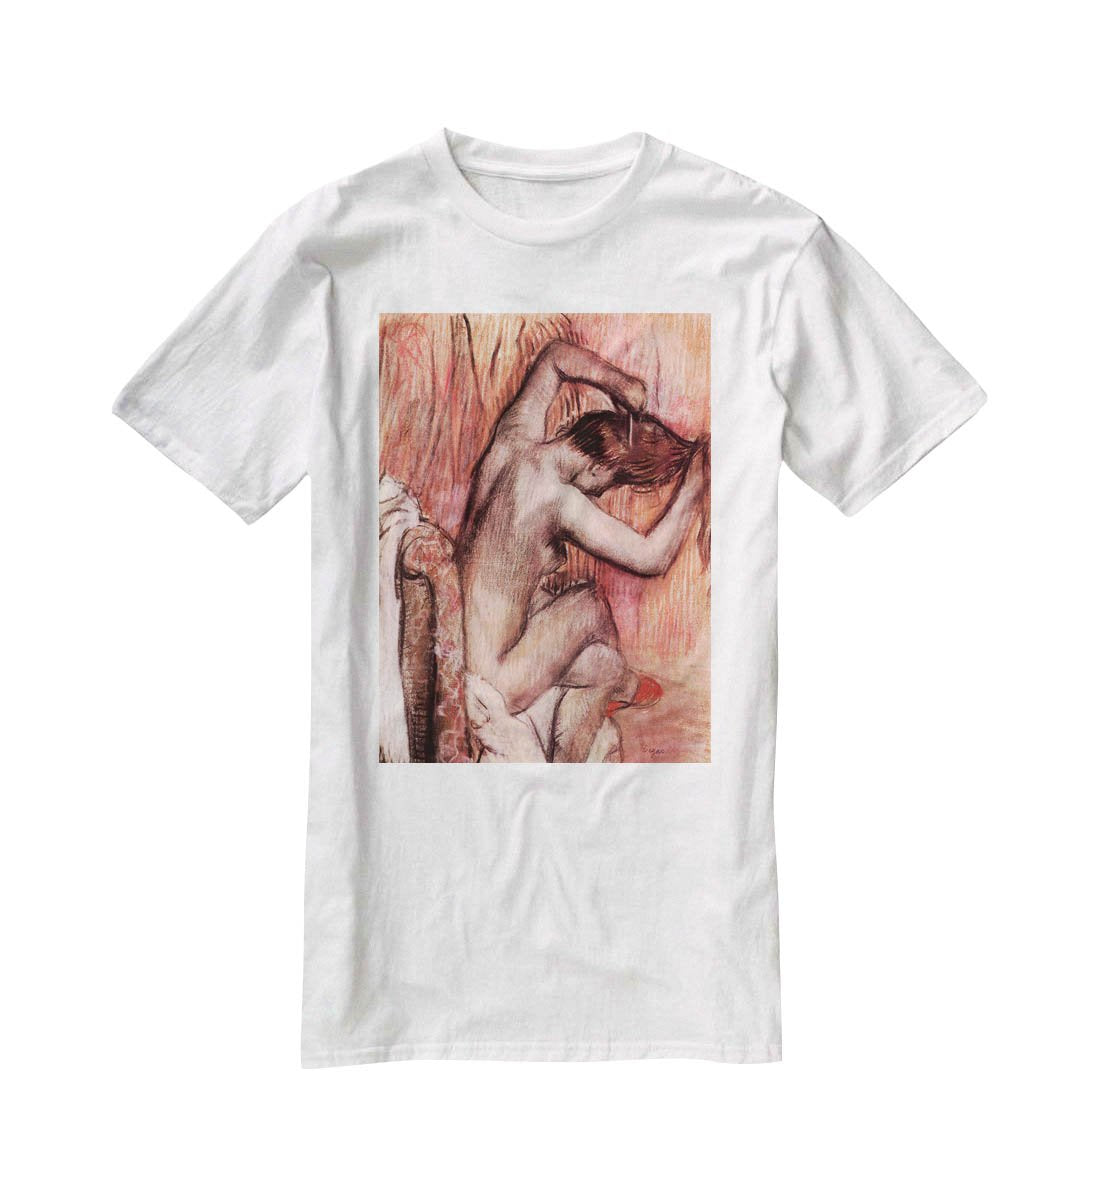 Sitting and brushing by Degas T-Shirt - Canvas Art Rocks - 5